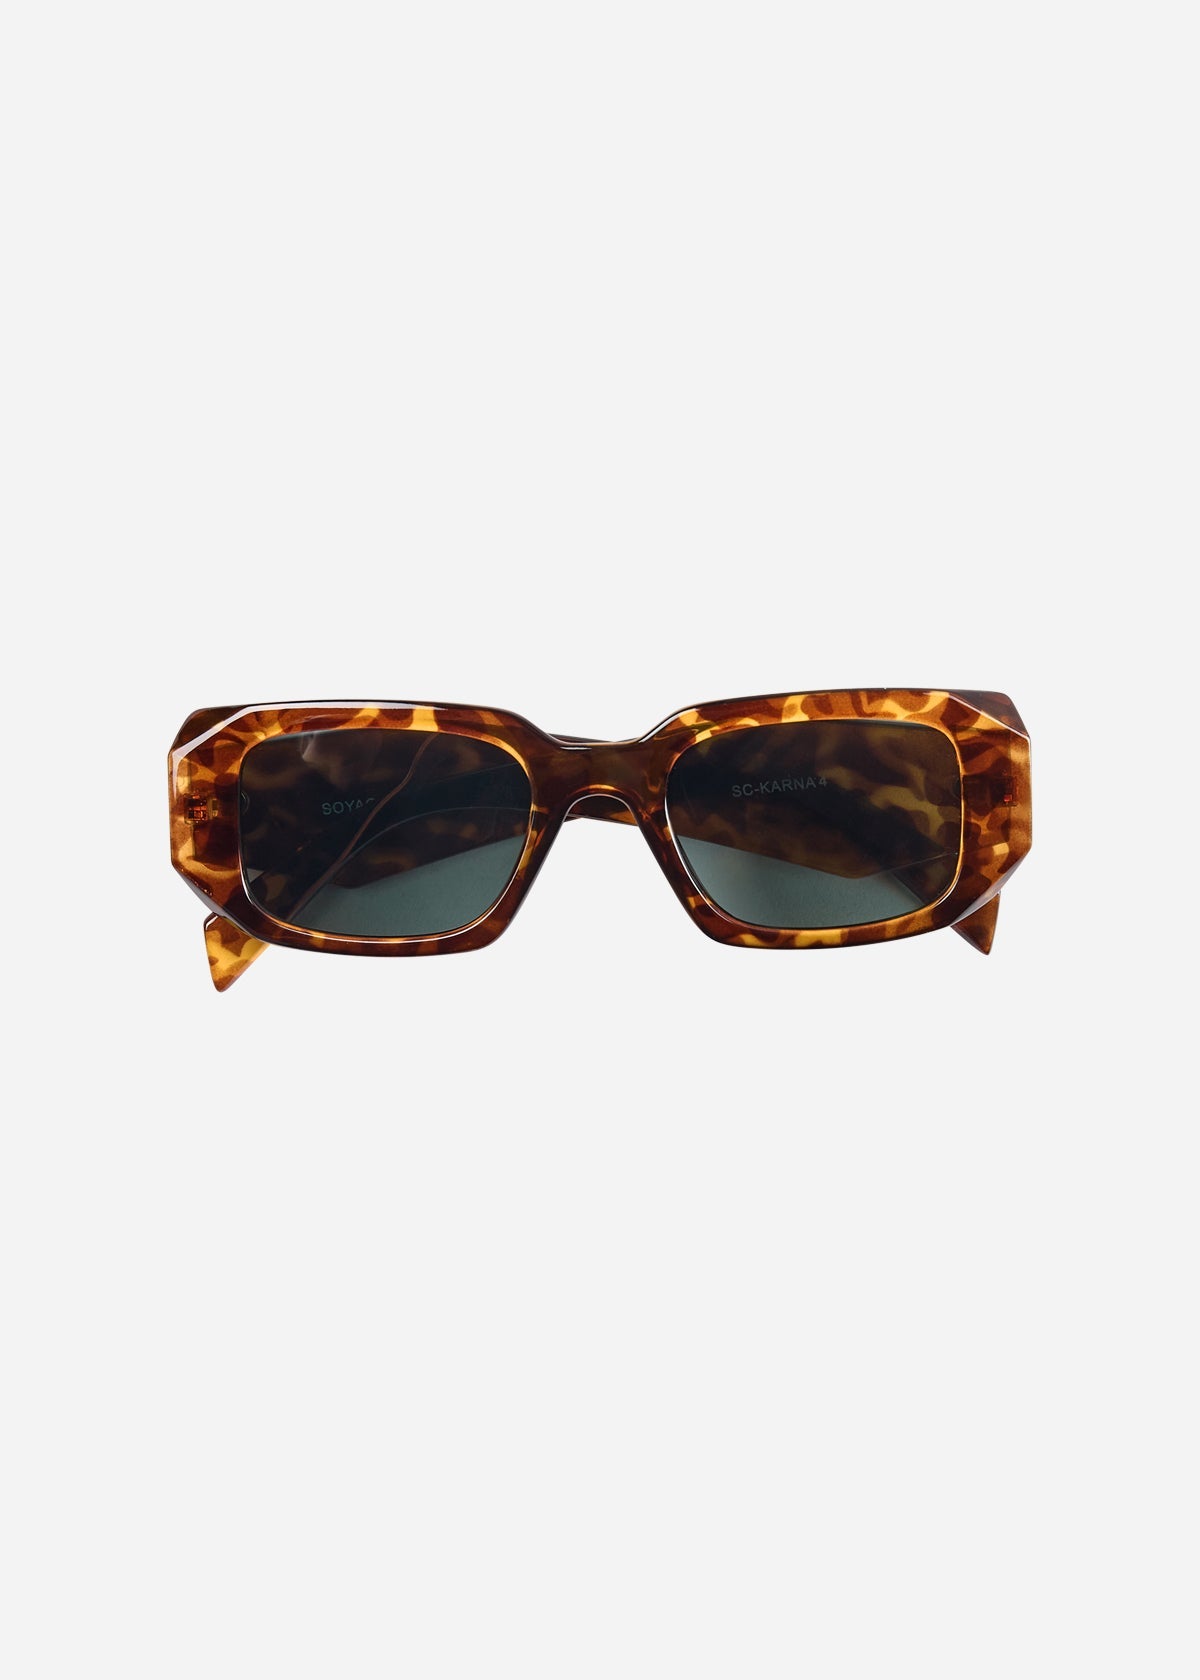 Soya Concept sunglasses - tortoiseshell